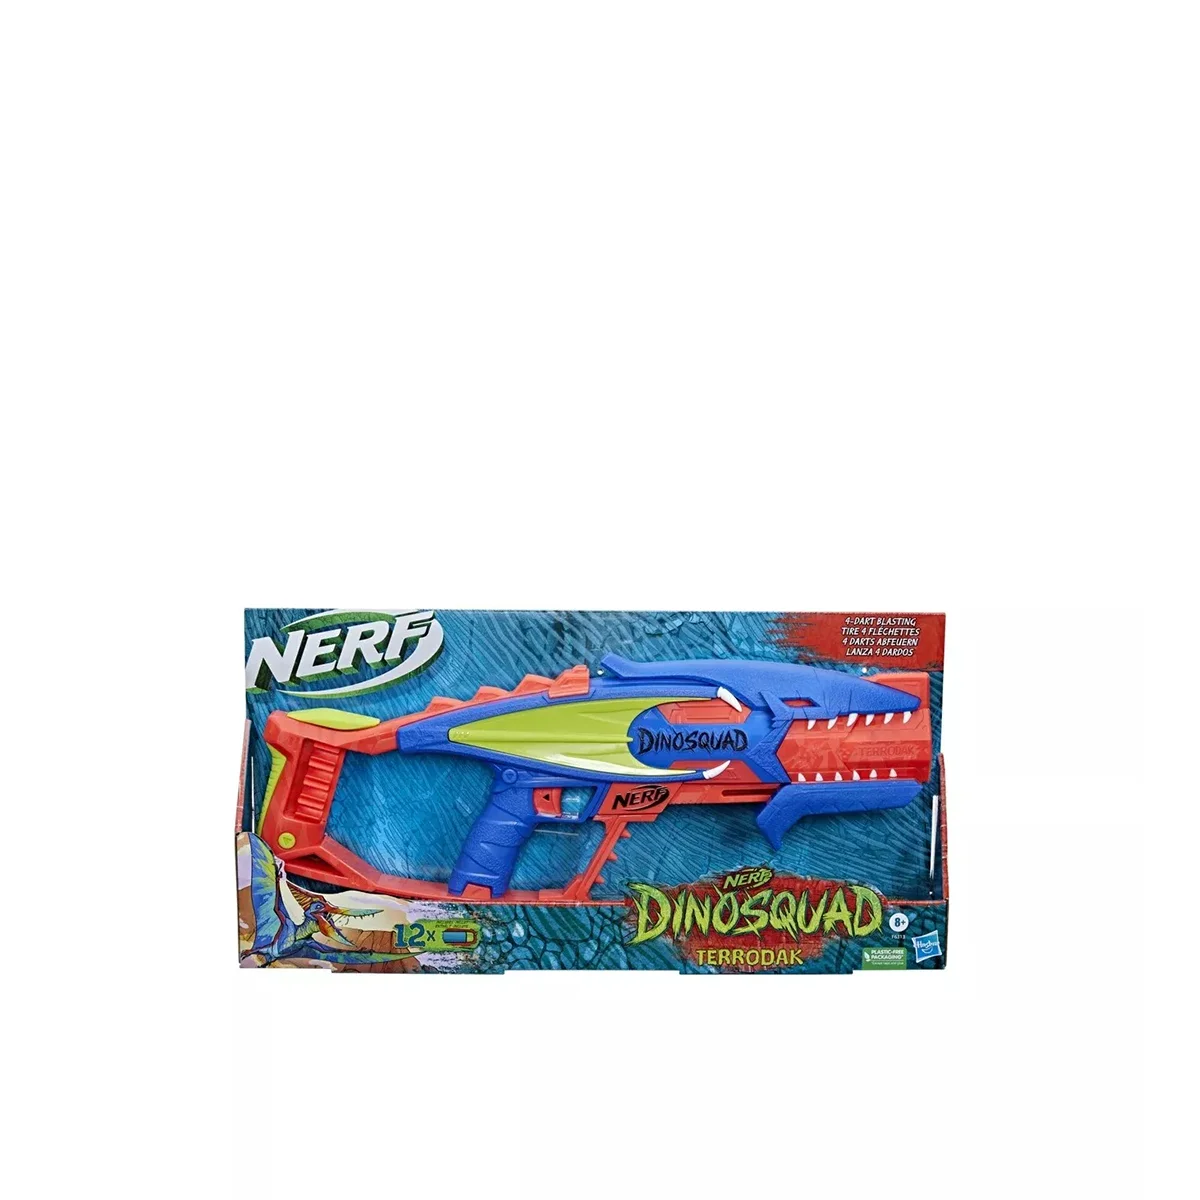 Nerf DinoSquad Terrodak, 12 Nerf Elite Darts, Dinosaur Design, 4 Dart Toy  Foam Nerf Blaster for Kids Outdoor Games